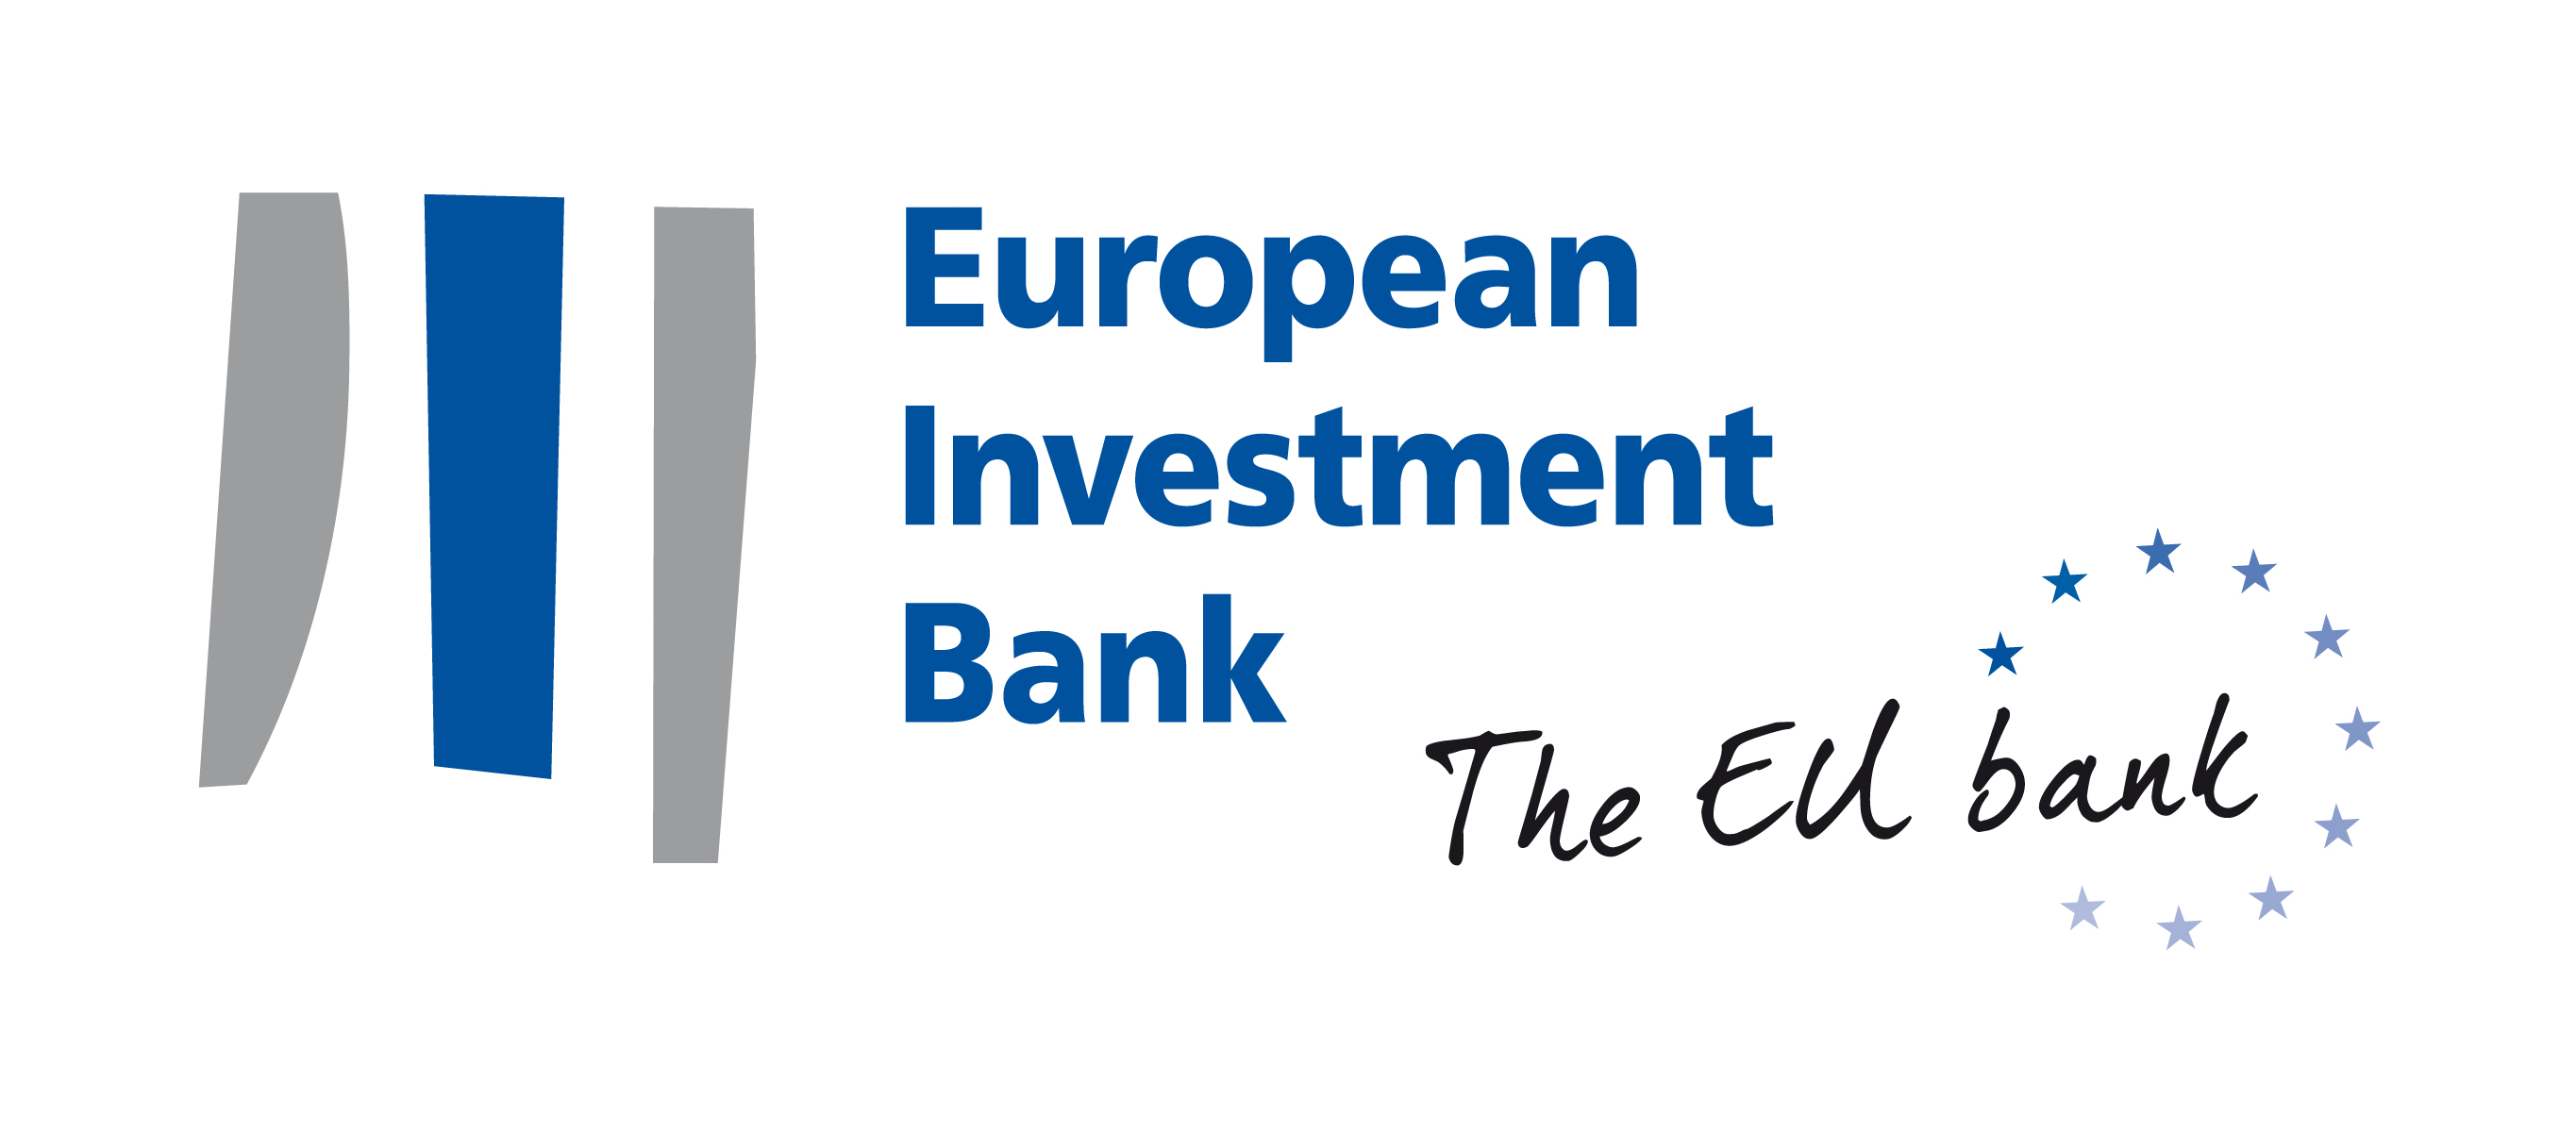 Европейские инвестиционные банки. Европейский инвестиционный банк (ЕИБ). European investment Bank лого. Европейский инвестиционный банк логотип. Логотип EIB.